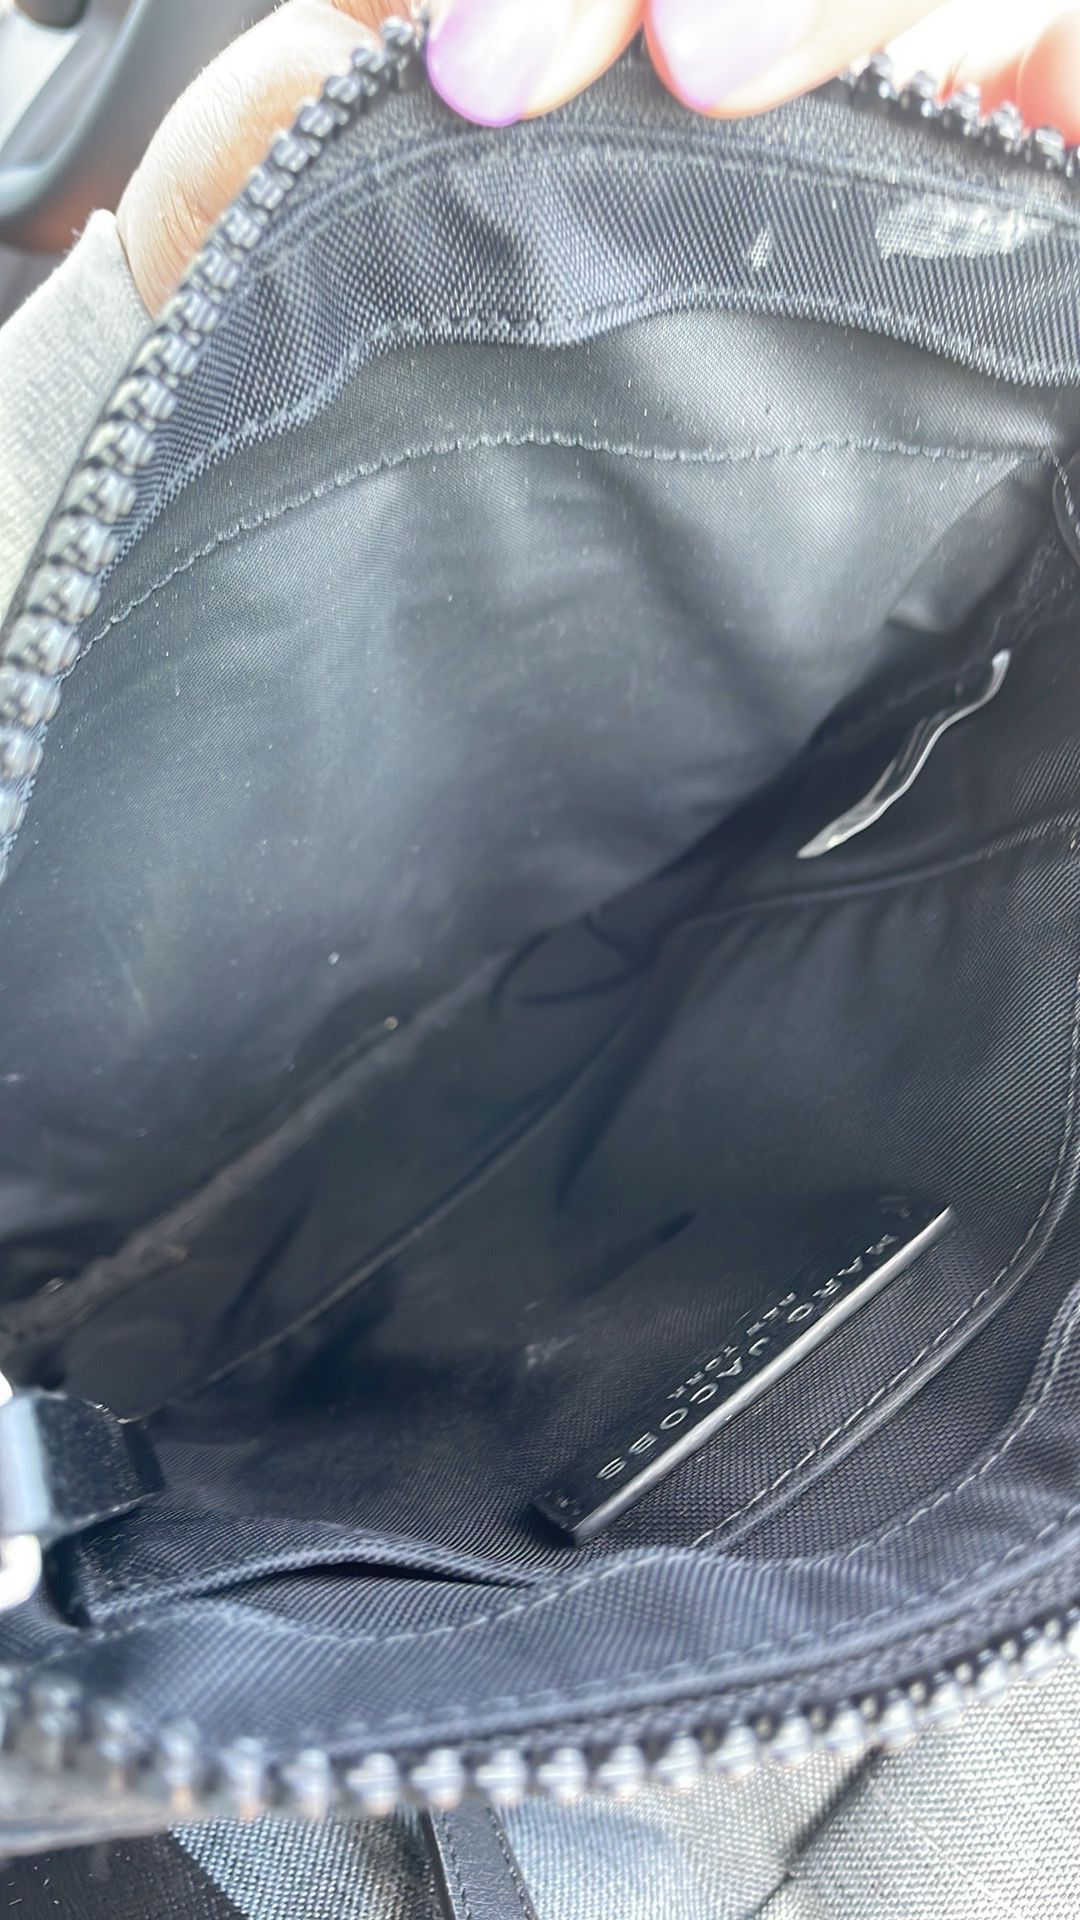 Marc Jacobs Black Nylon Crossbody Bag